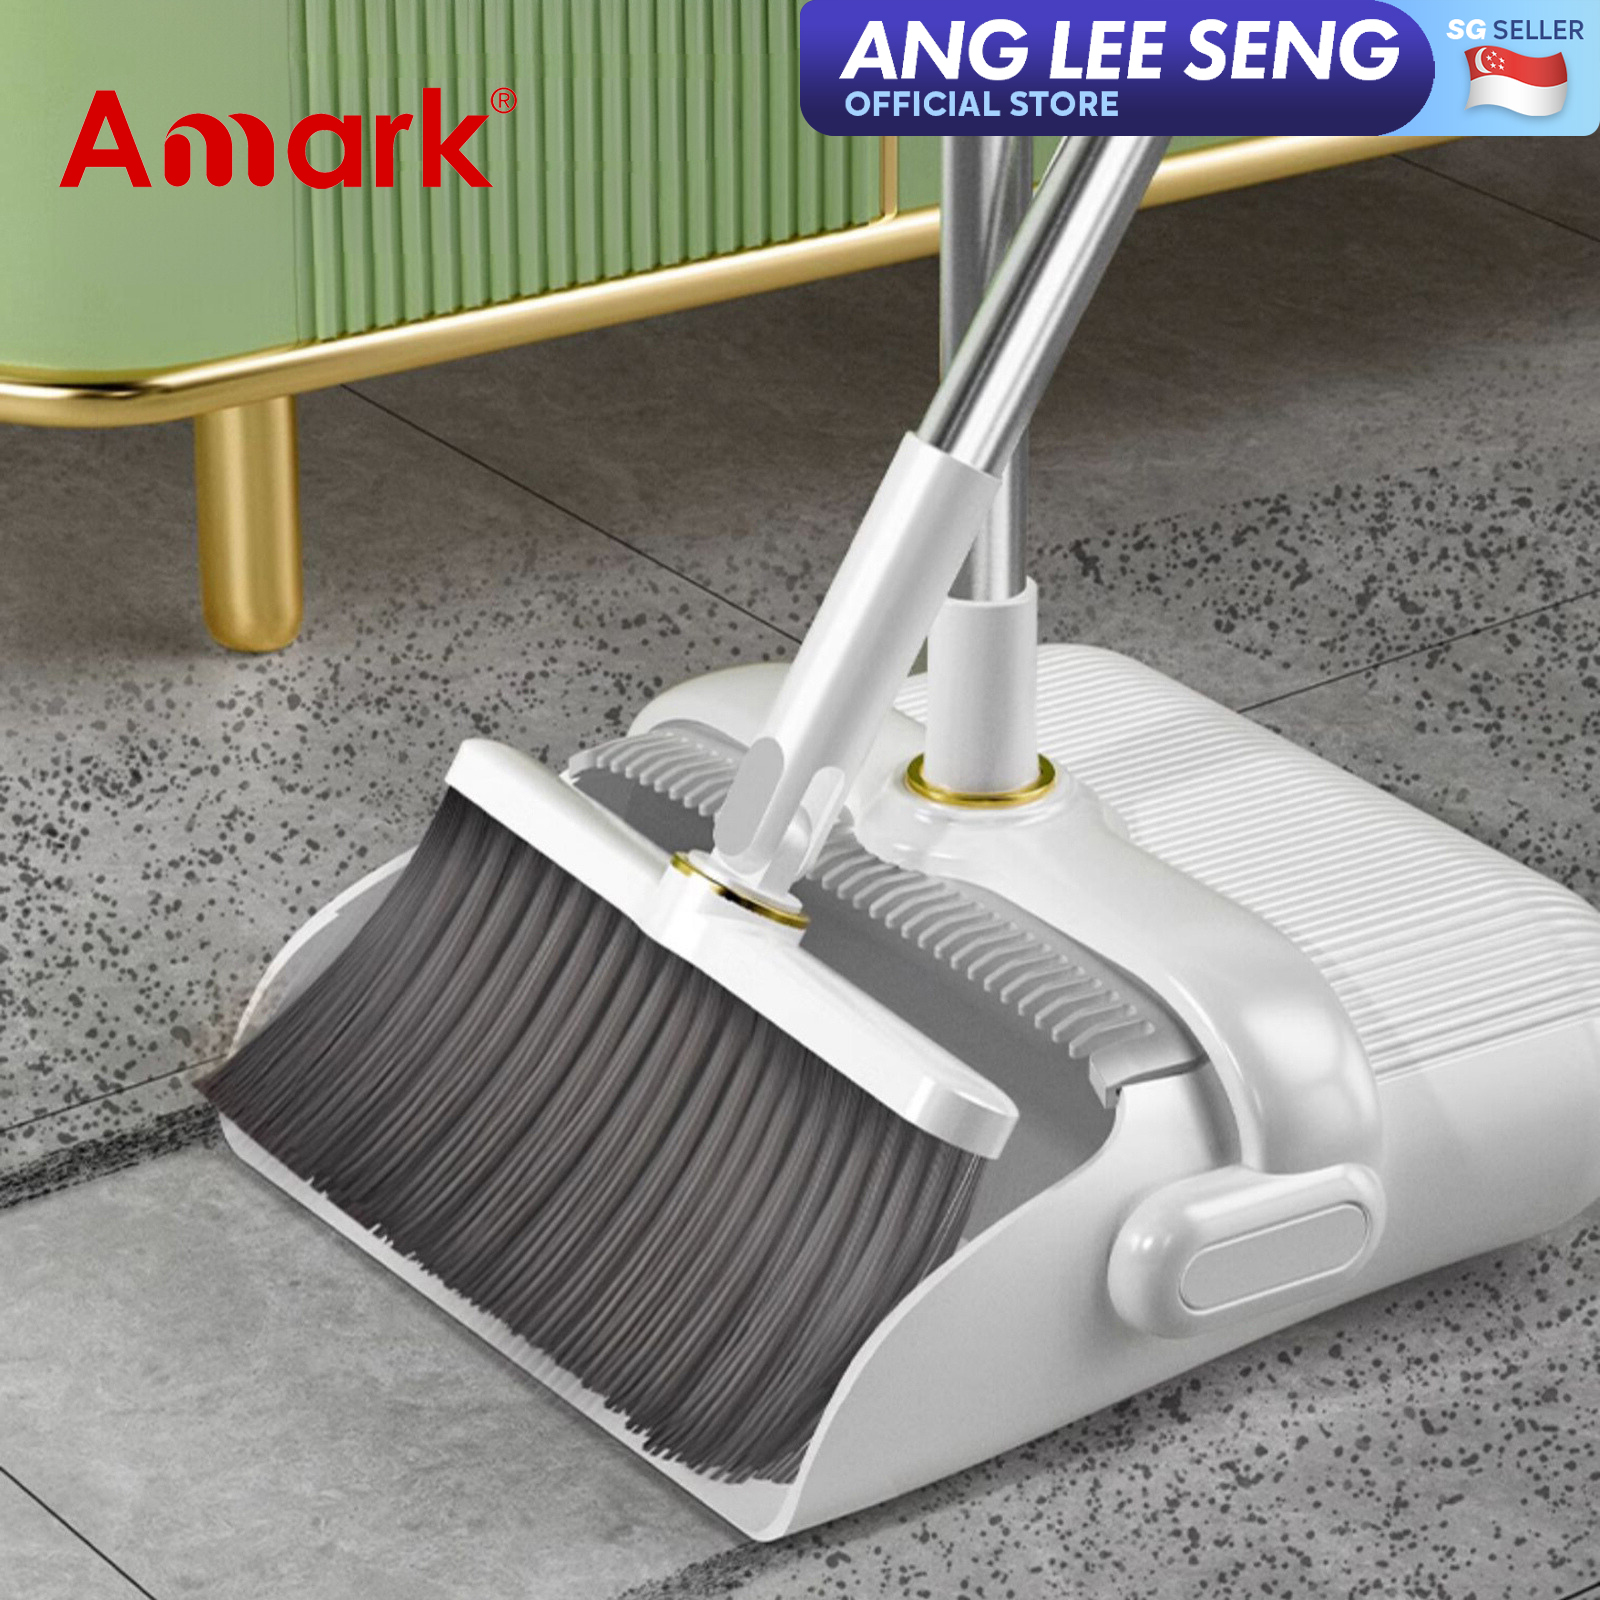 Amark Stainless Steel Dustpan & Broom Set